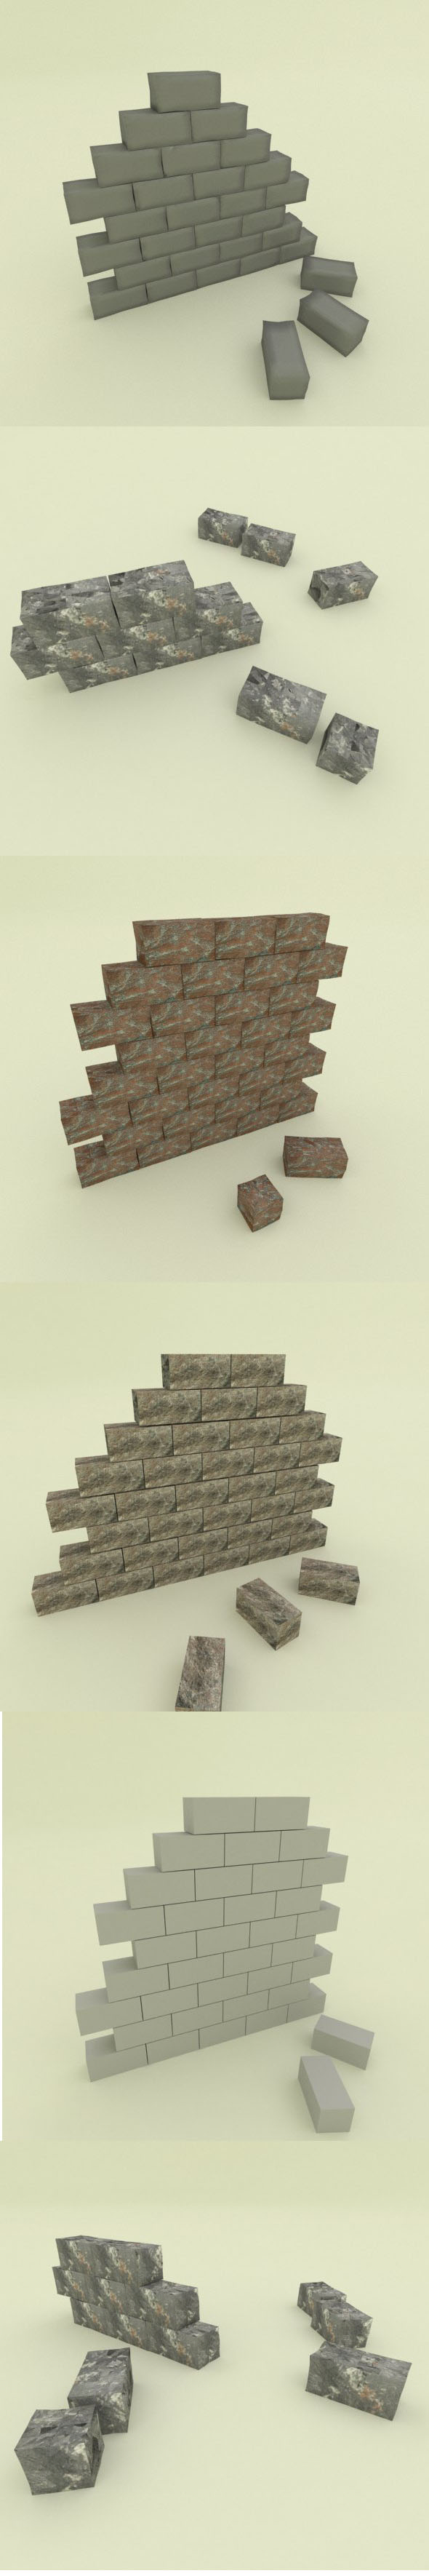 5 stone wall - 3Docean 16615150